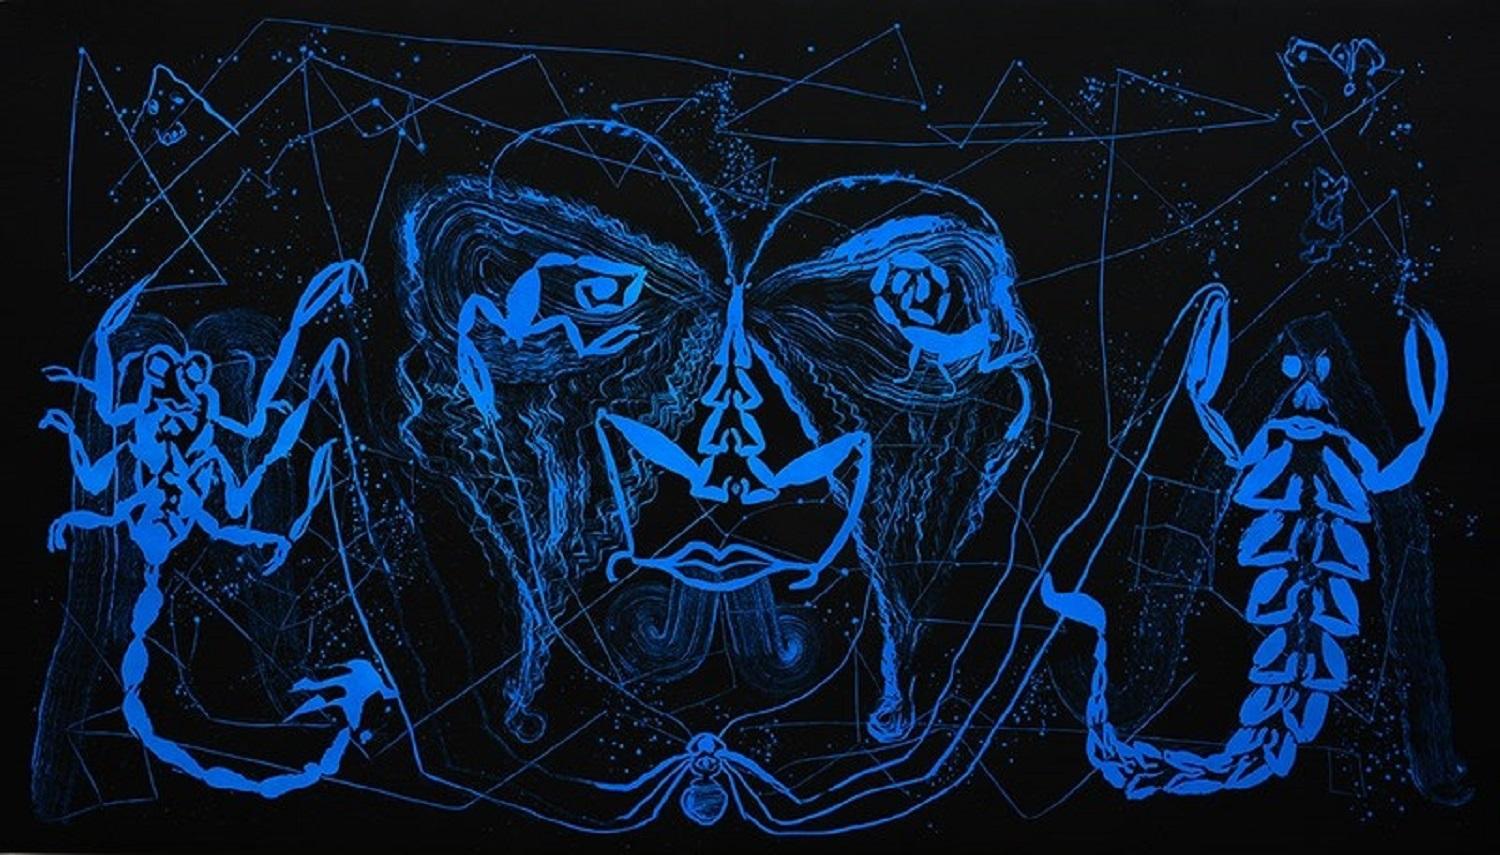 Sergio Hernández, 'Alacranes azules', 2016, Woodcut, 46.9x82.7 in